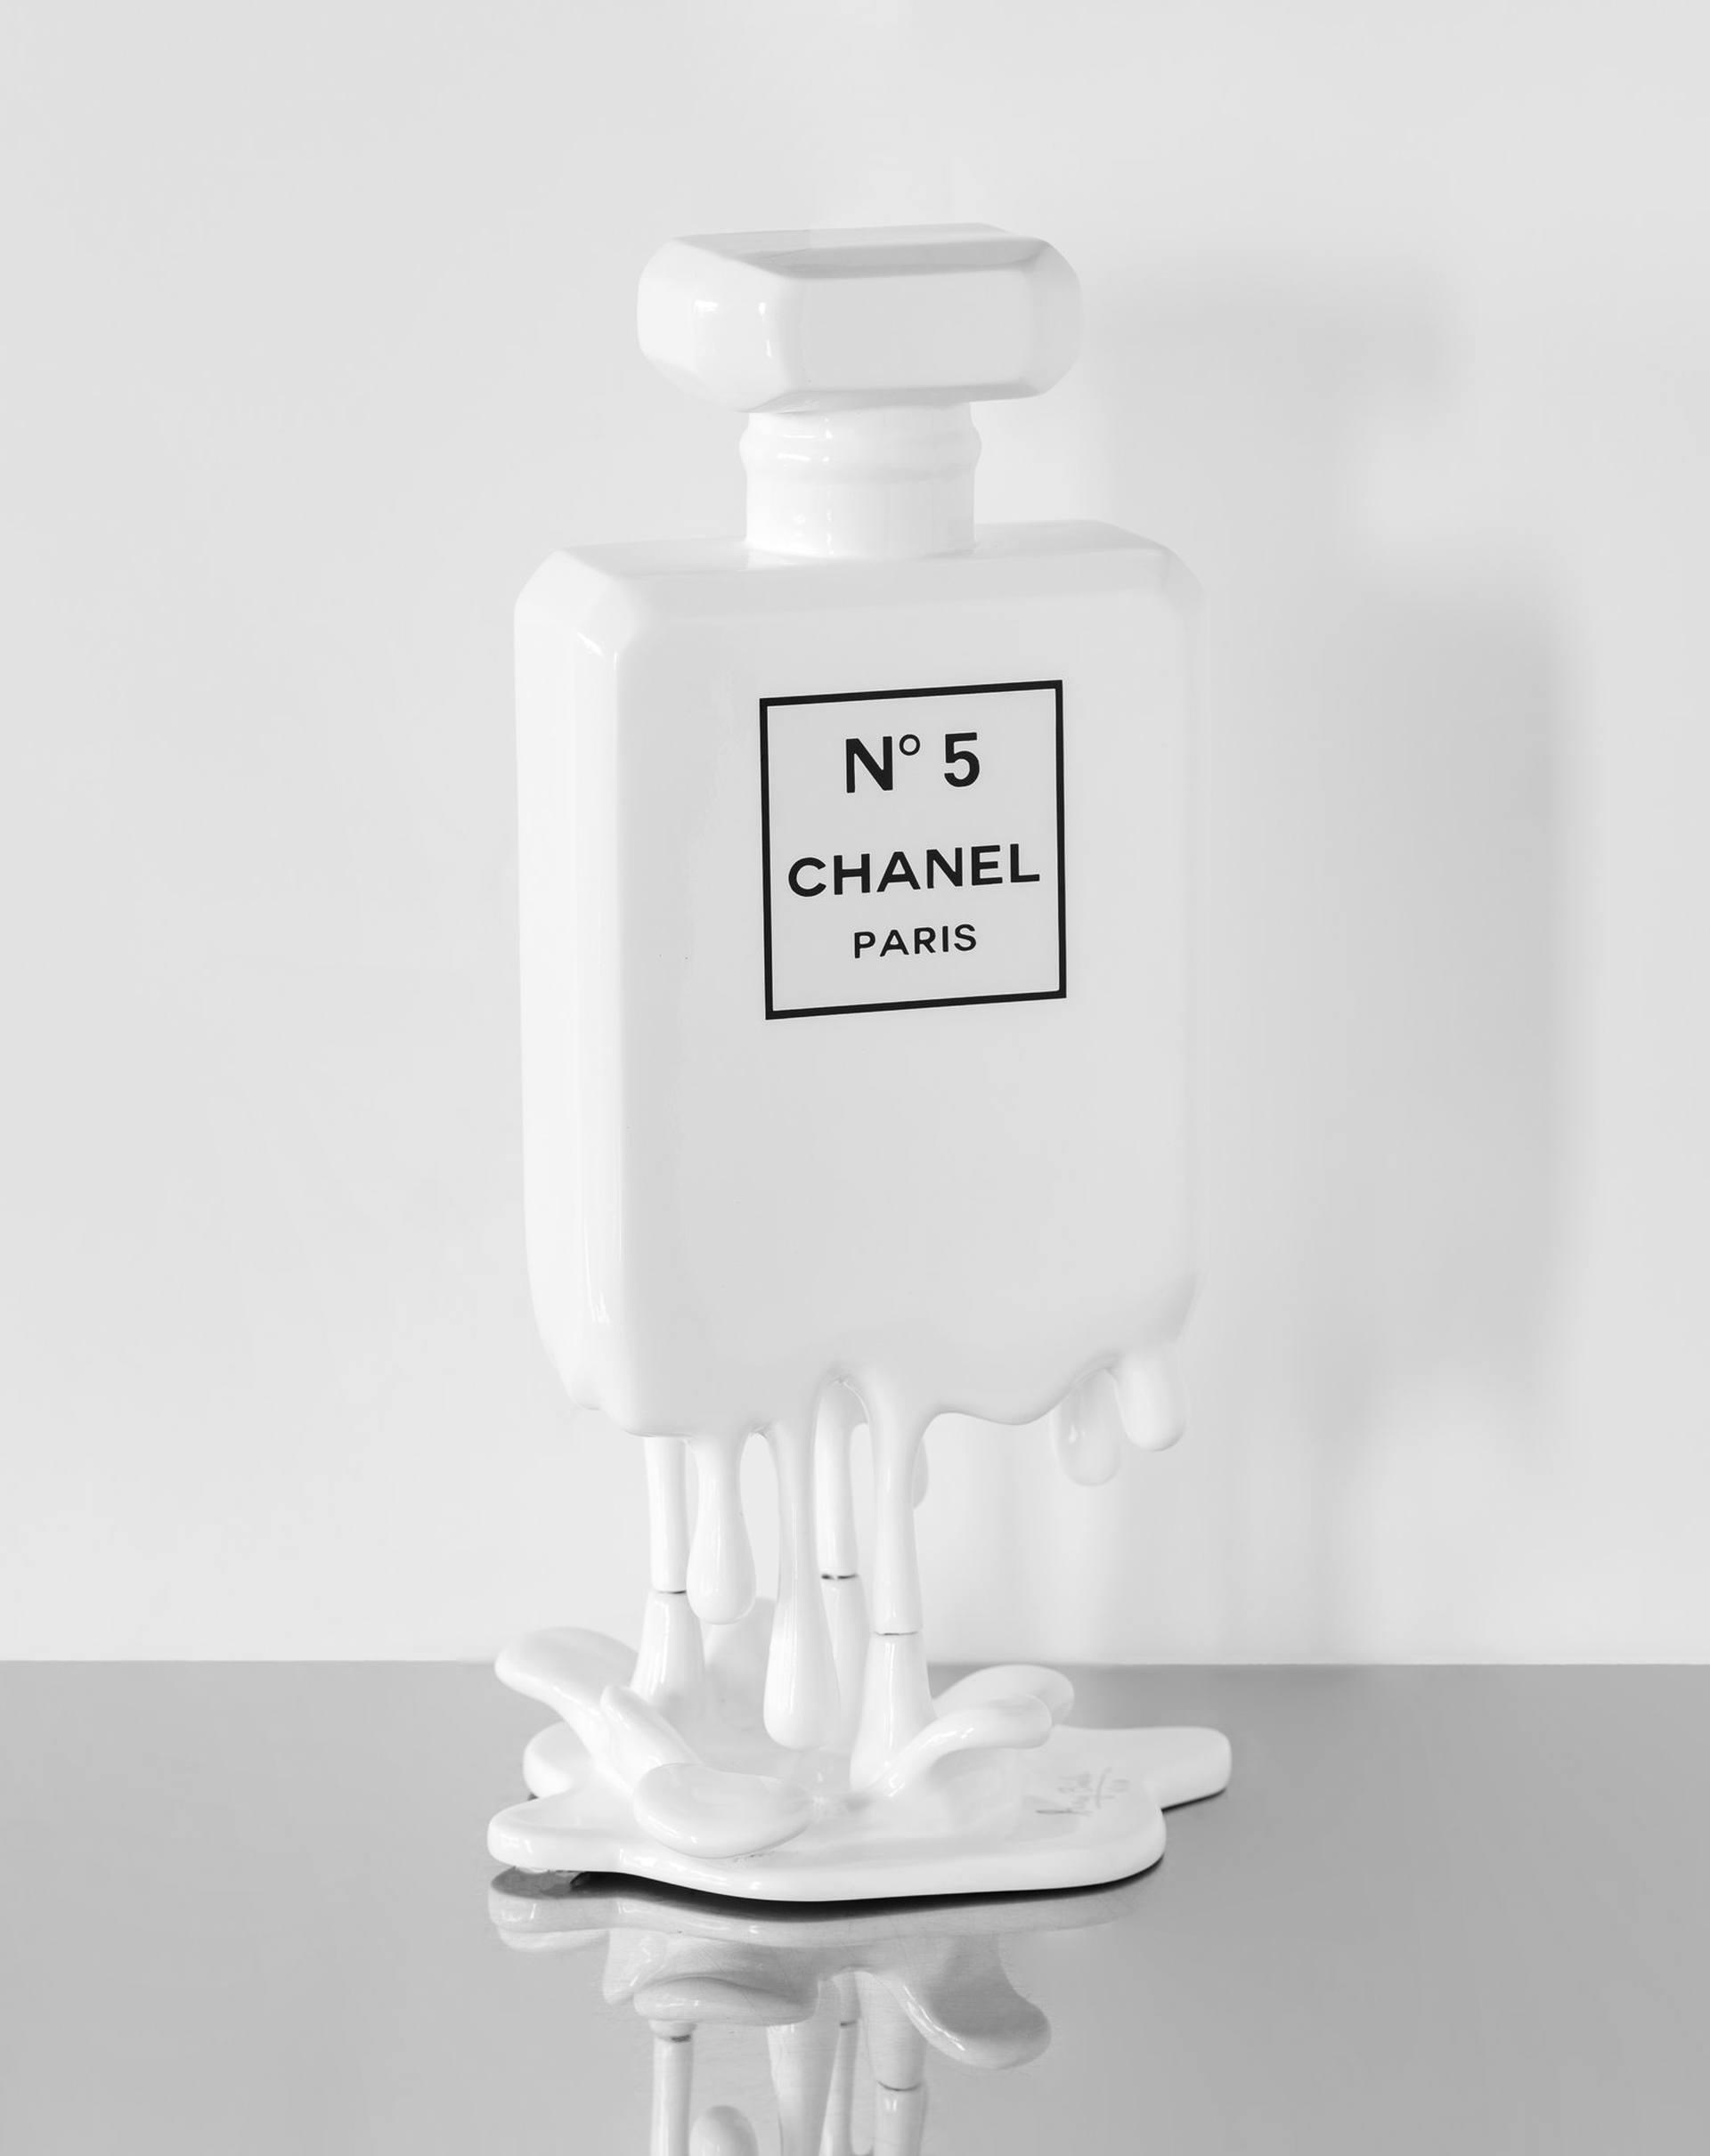 Chanel No 5 Drip white Sculpture by Sanuj Birla